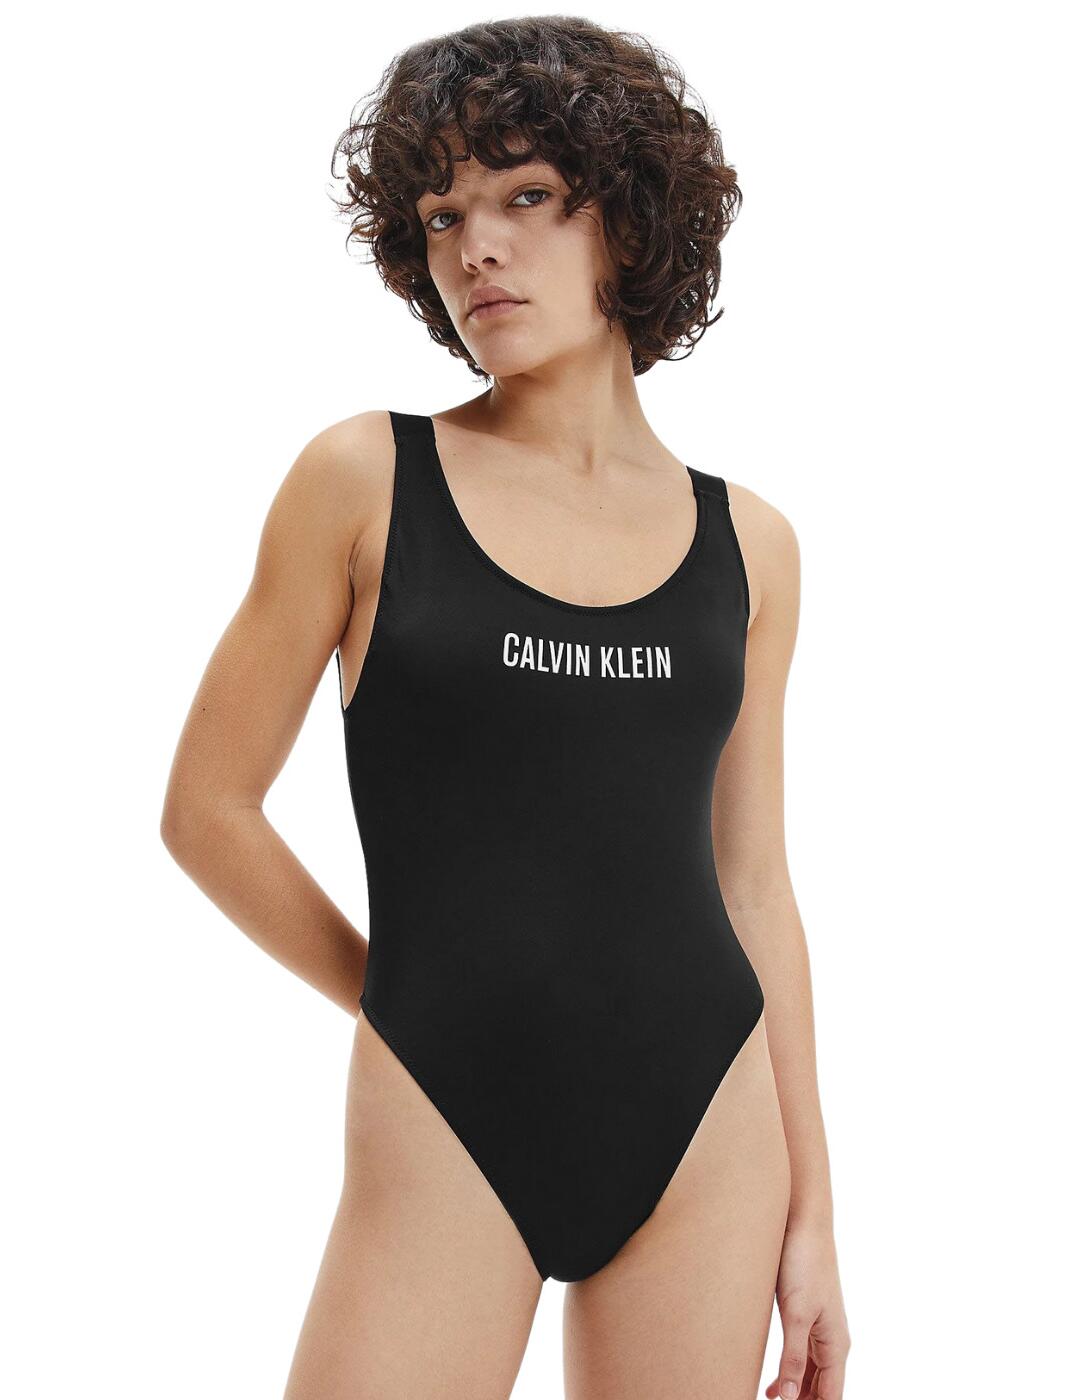 Calvin Klein Intense Power One Piece Swimsuit - Belle Lingerie